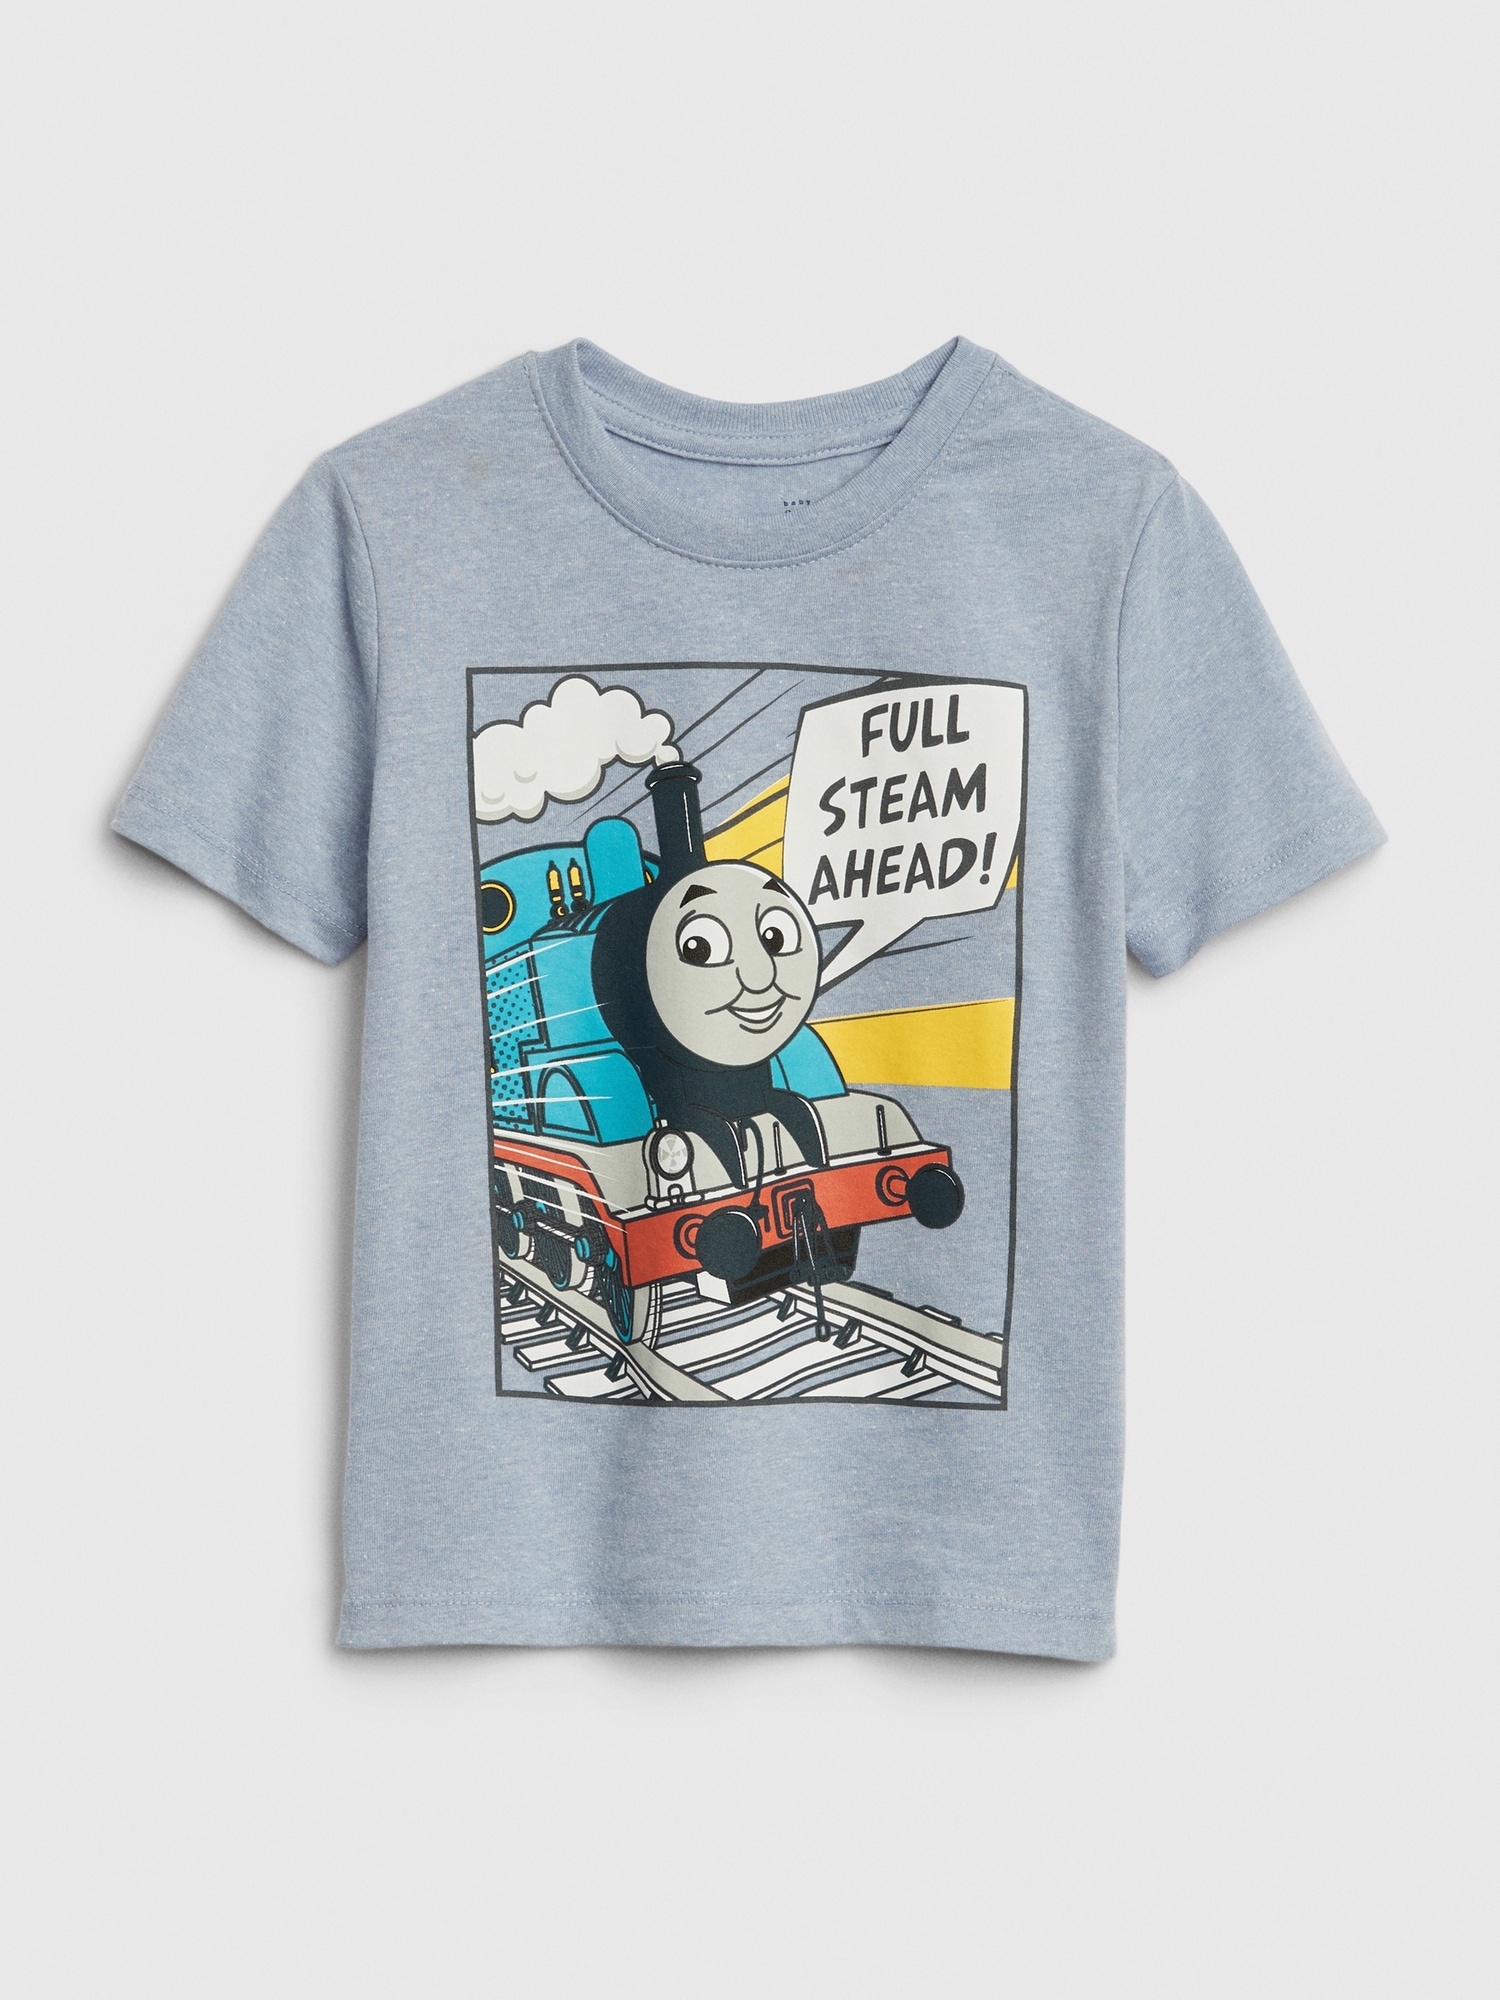  Thomas The Train Boy Short Sleeve Tight Fit Cotton